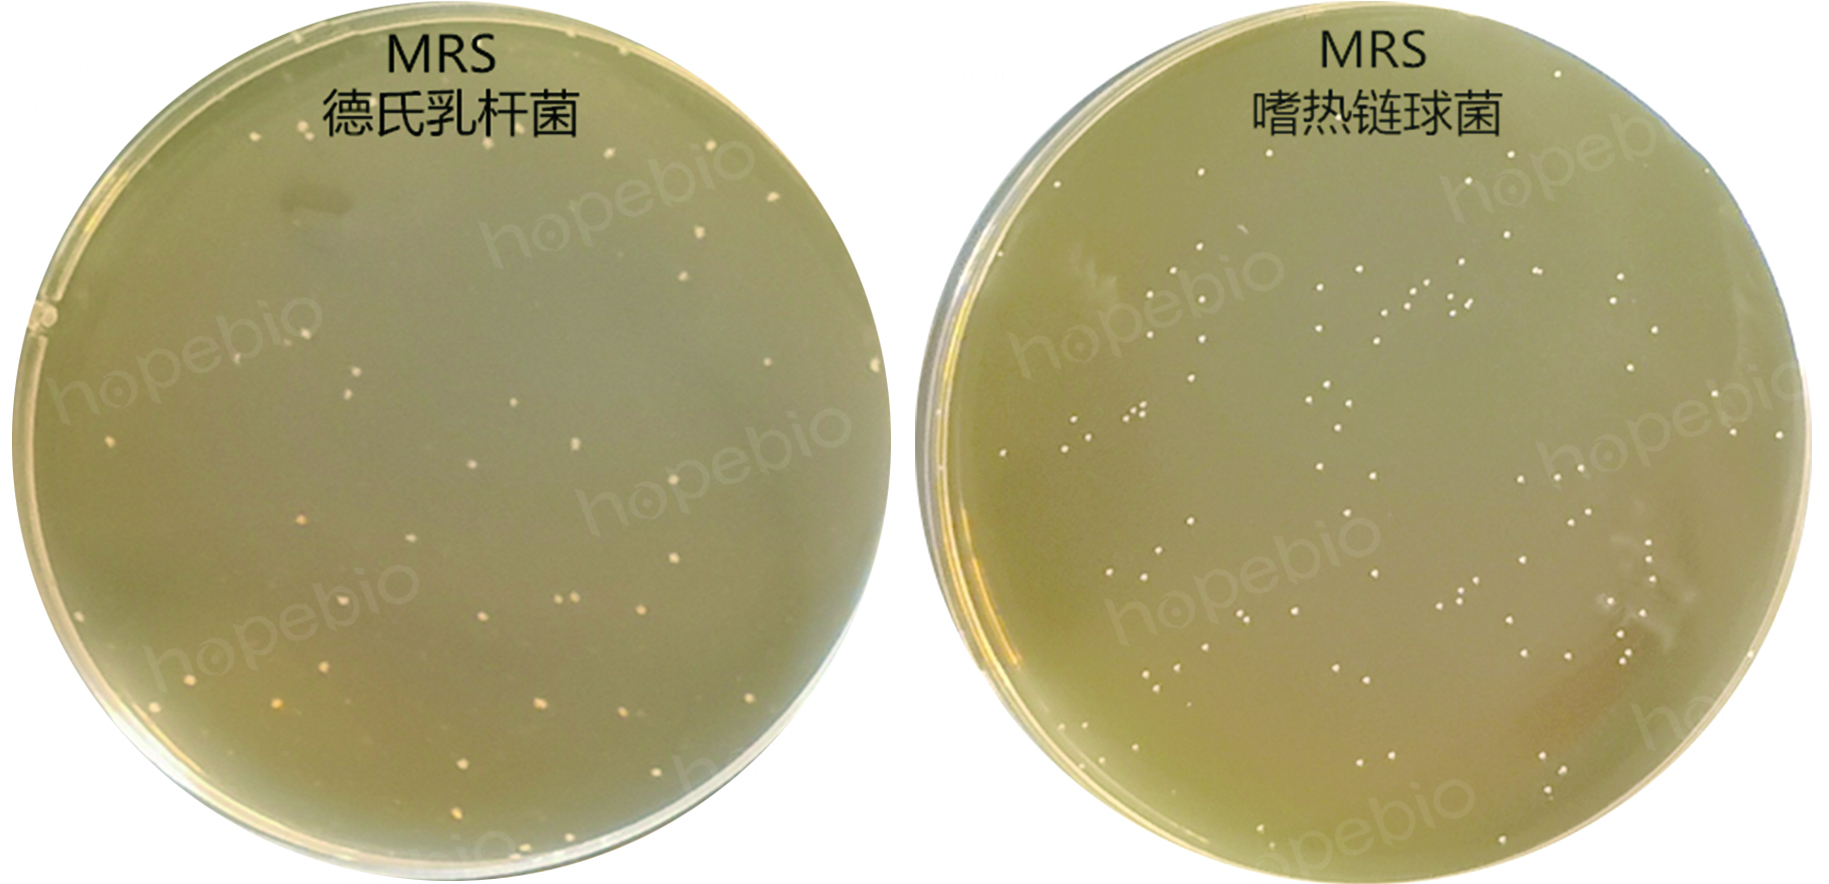 MRS上德氏乳杆菌和嗜热链球菌的菌落形态